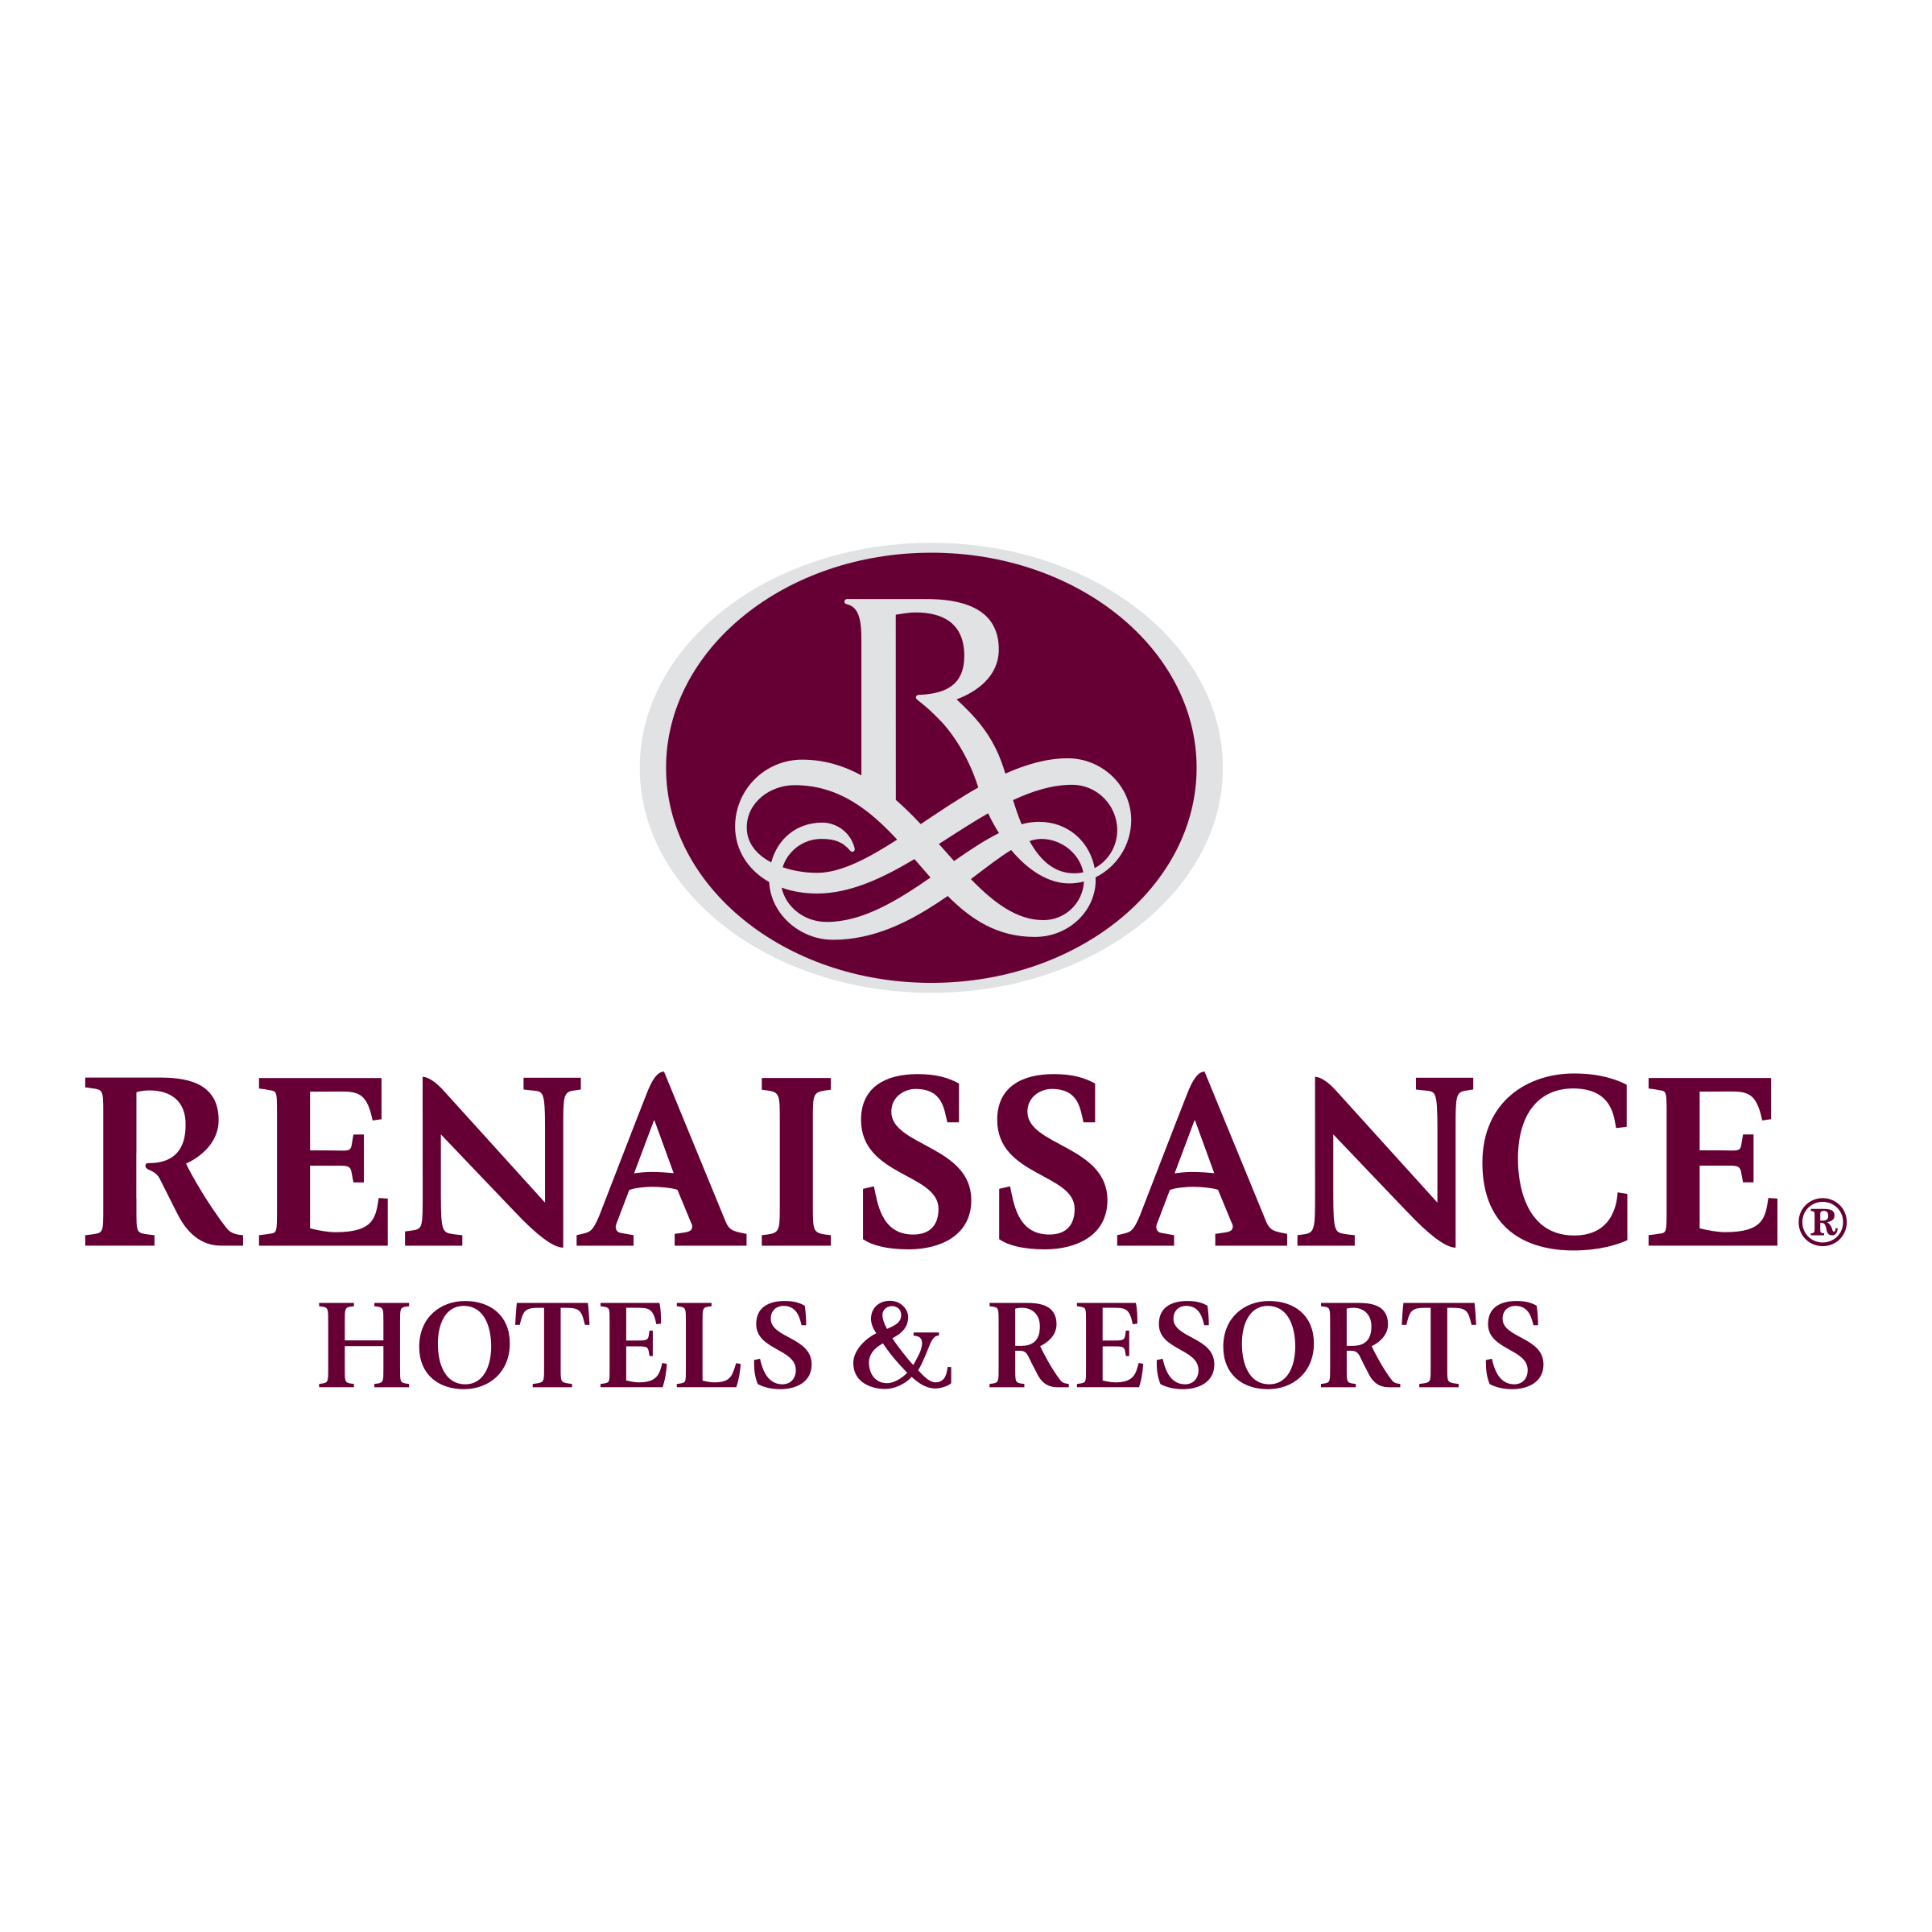 Renaissance Logo - Renaissance Hotels & Resorts Logo PNG Transparent & SVG Vector ...